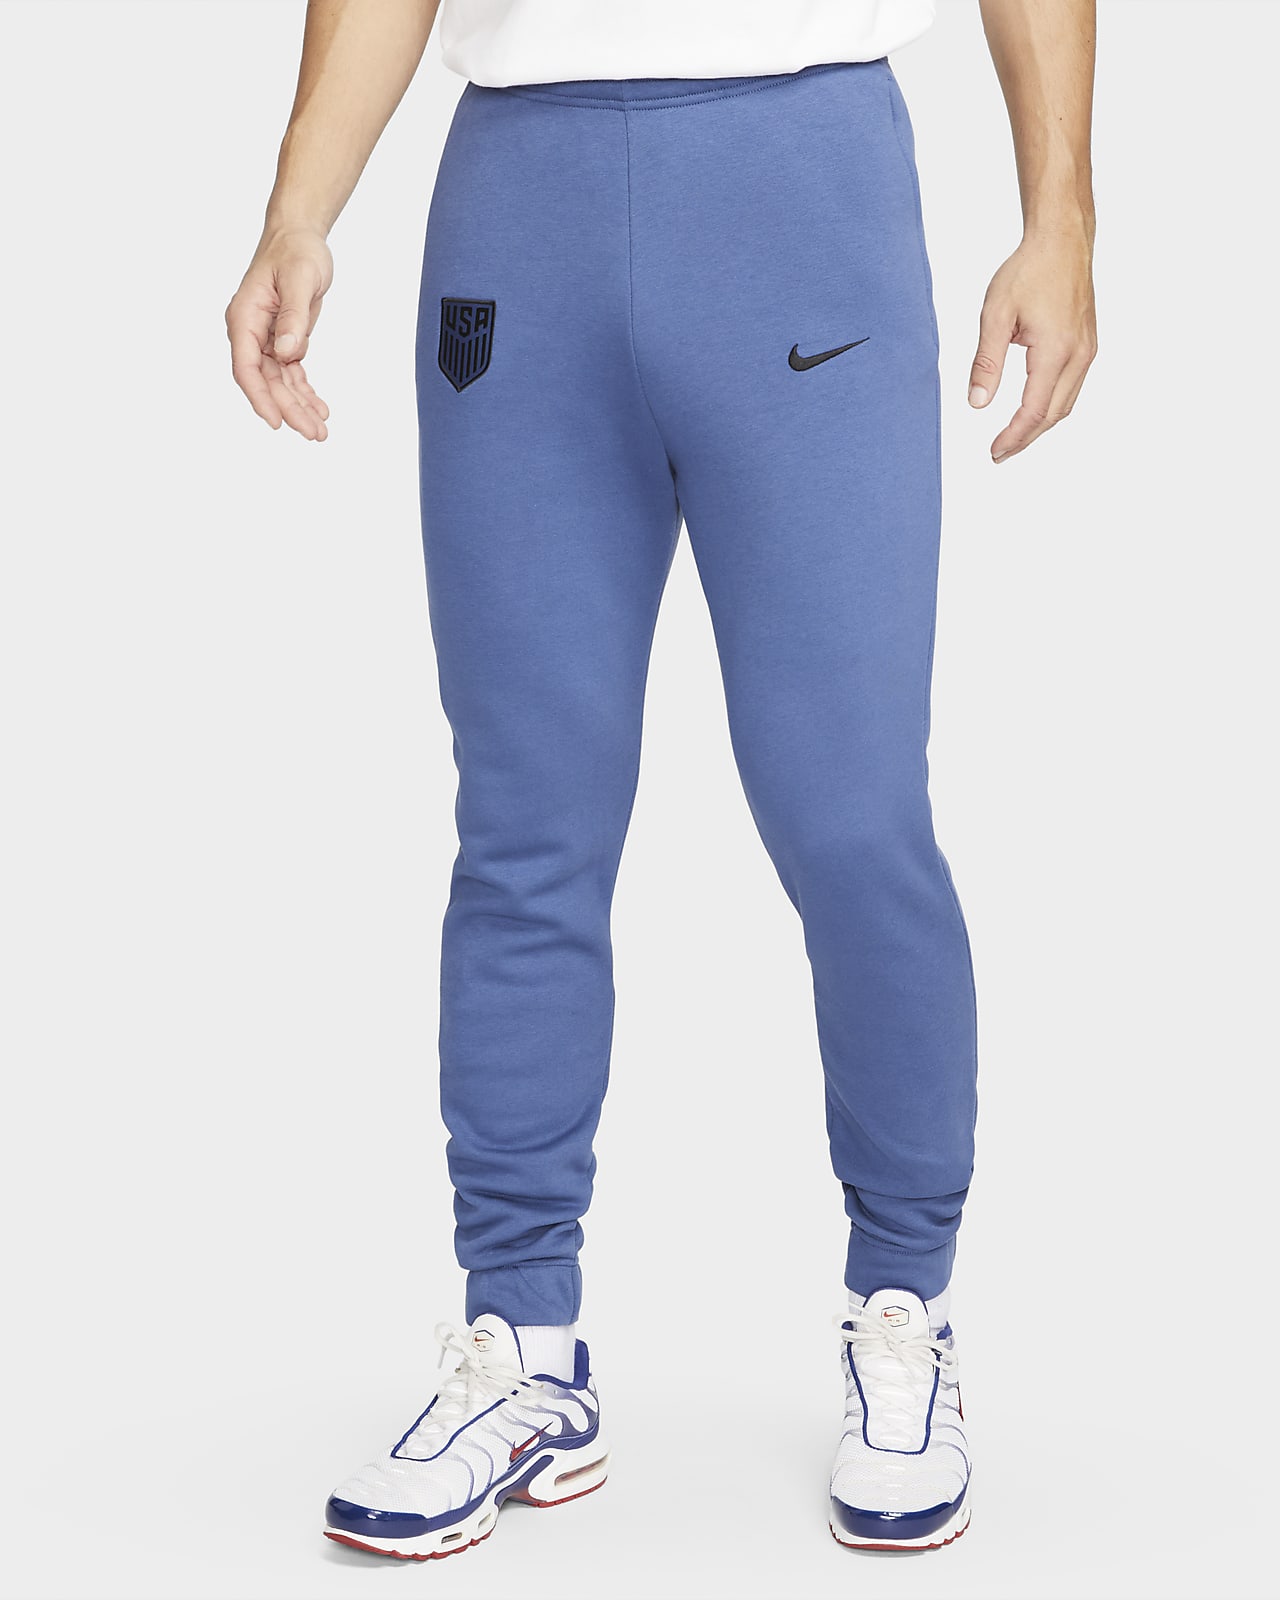 U.S. Men's Nike Fleece Soccer Pants.